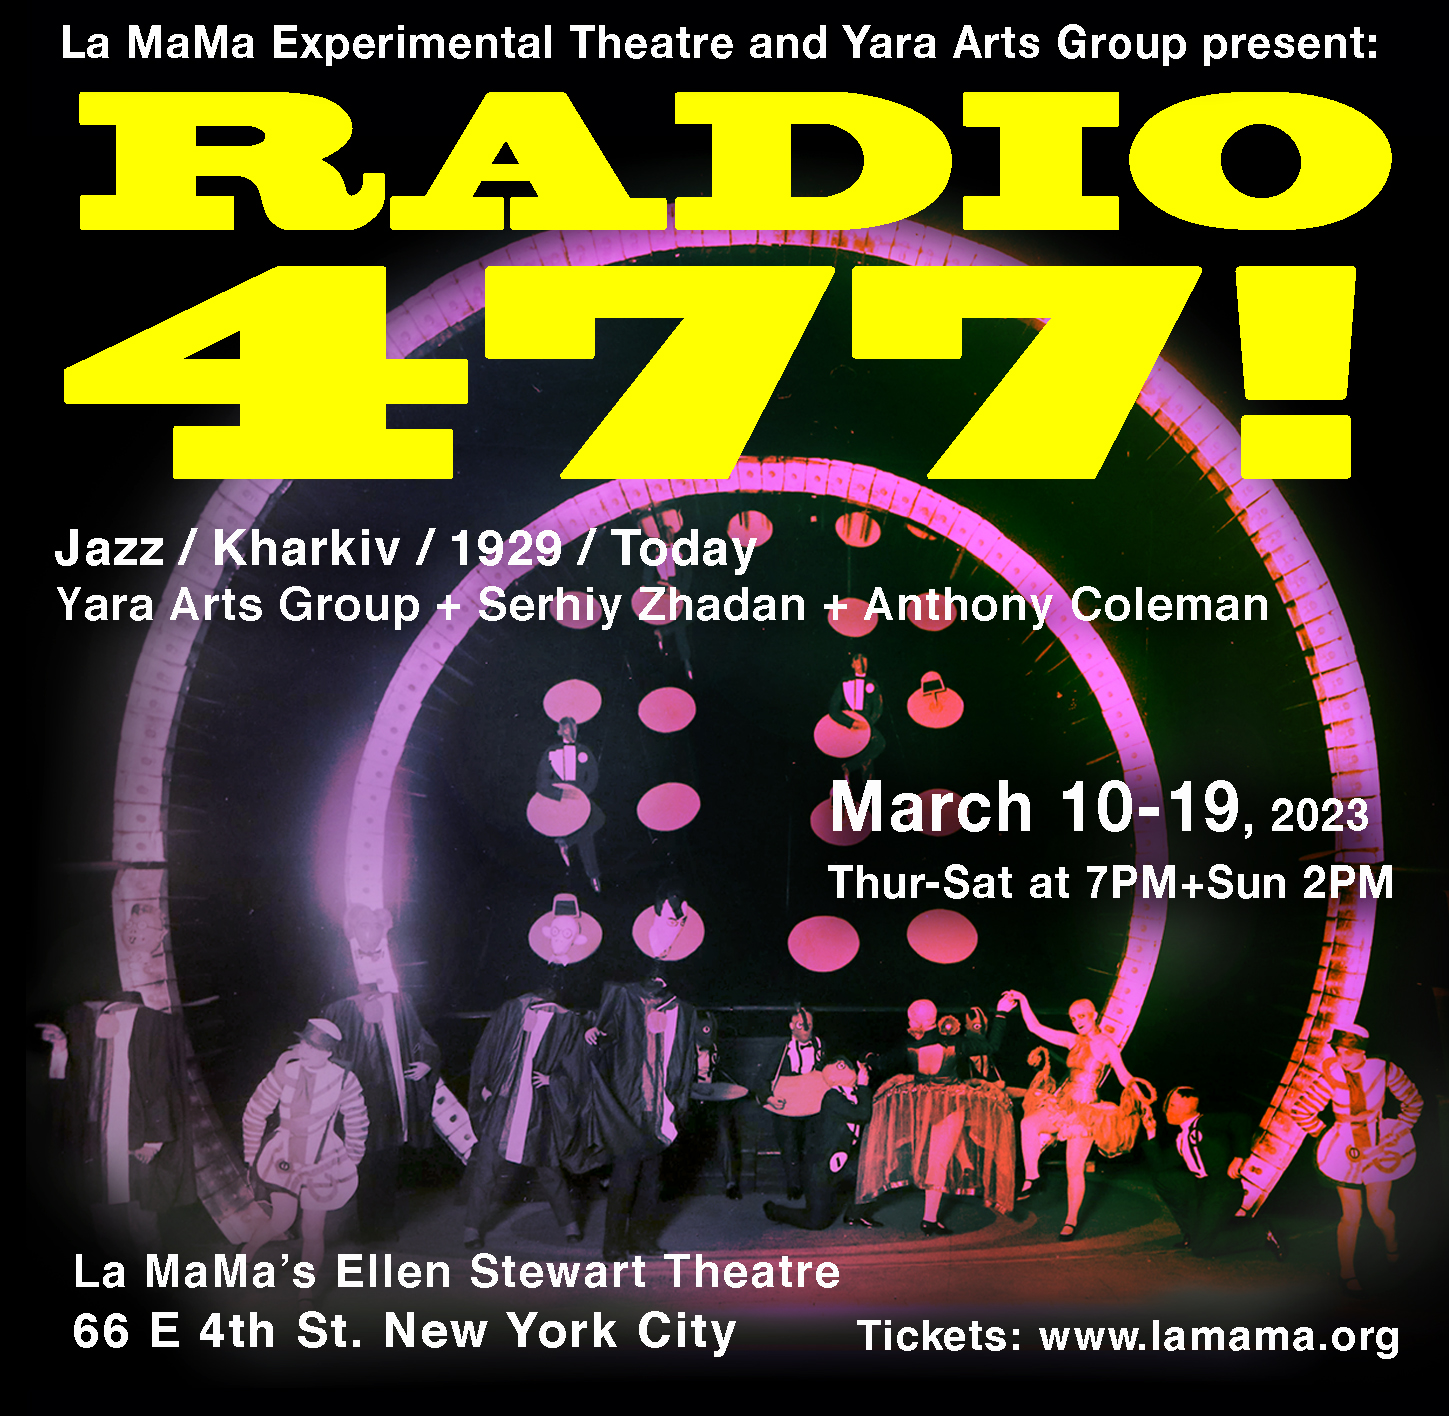 Radio 477! Jazz/Kharkiv/1929/Today